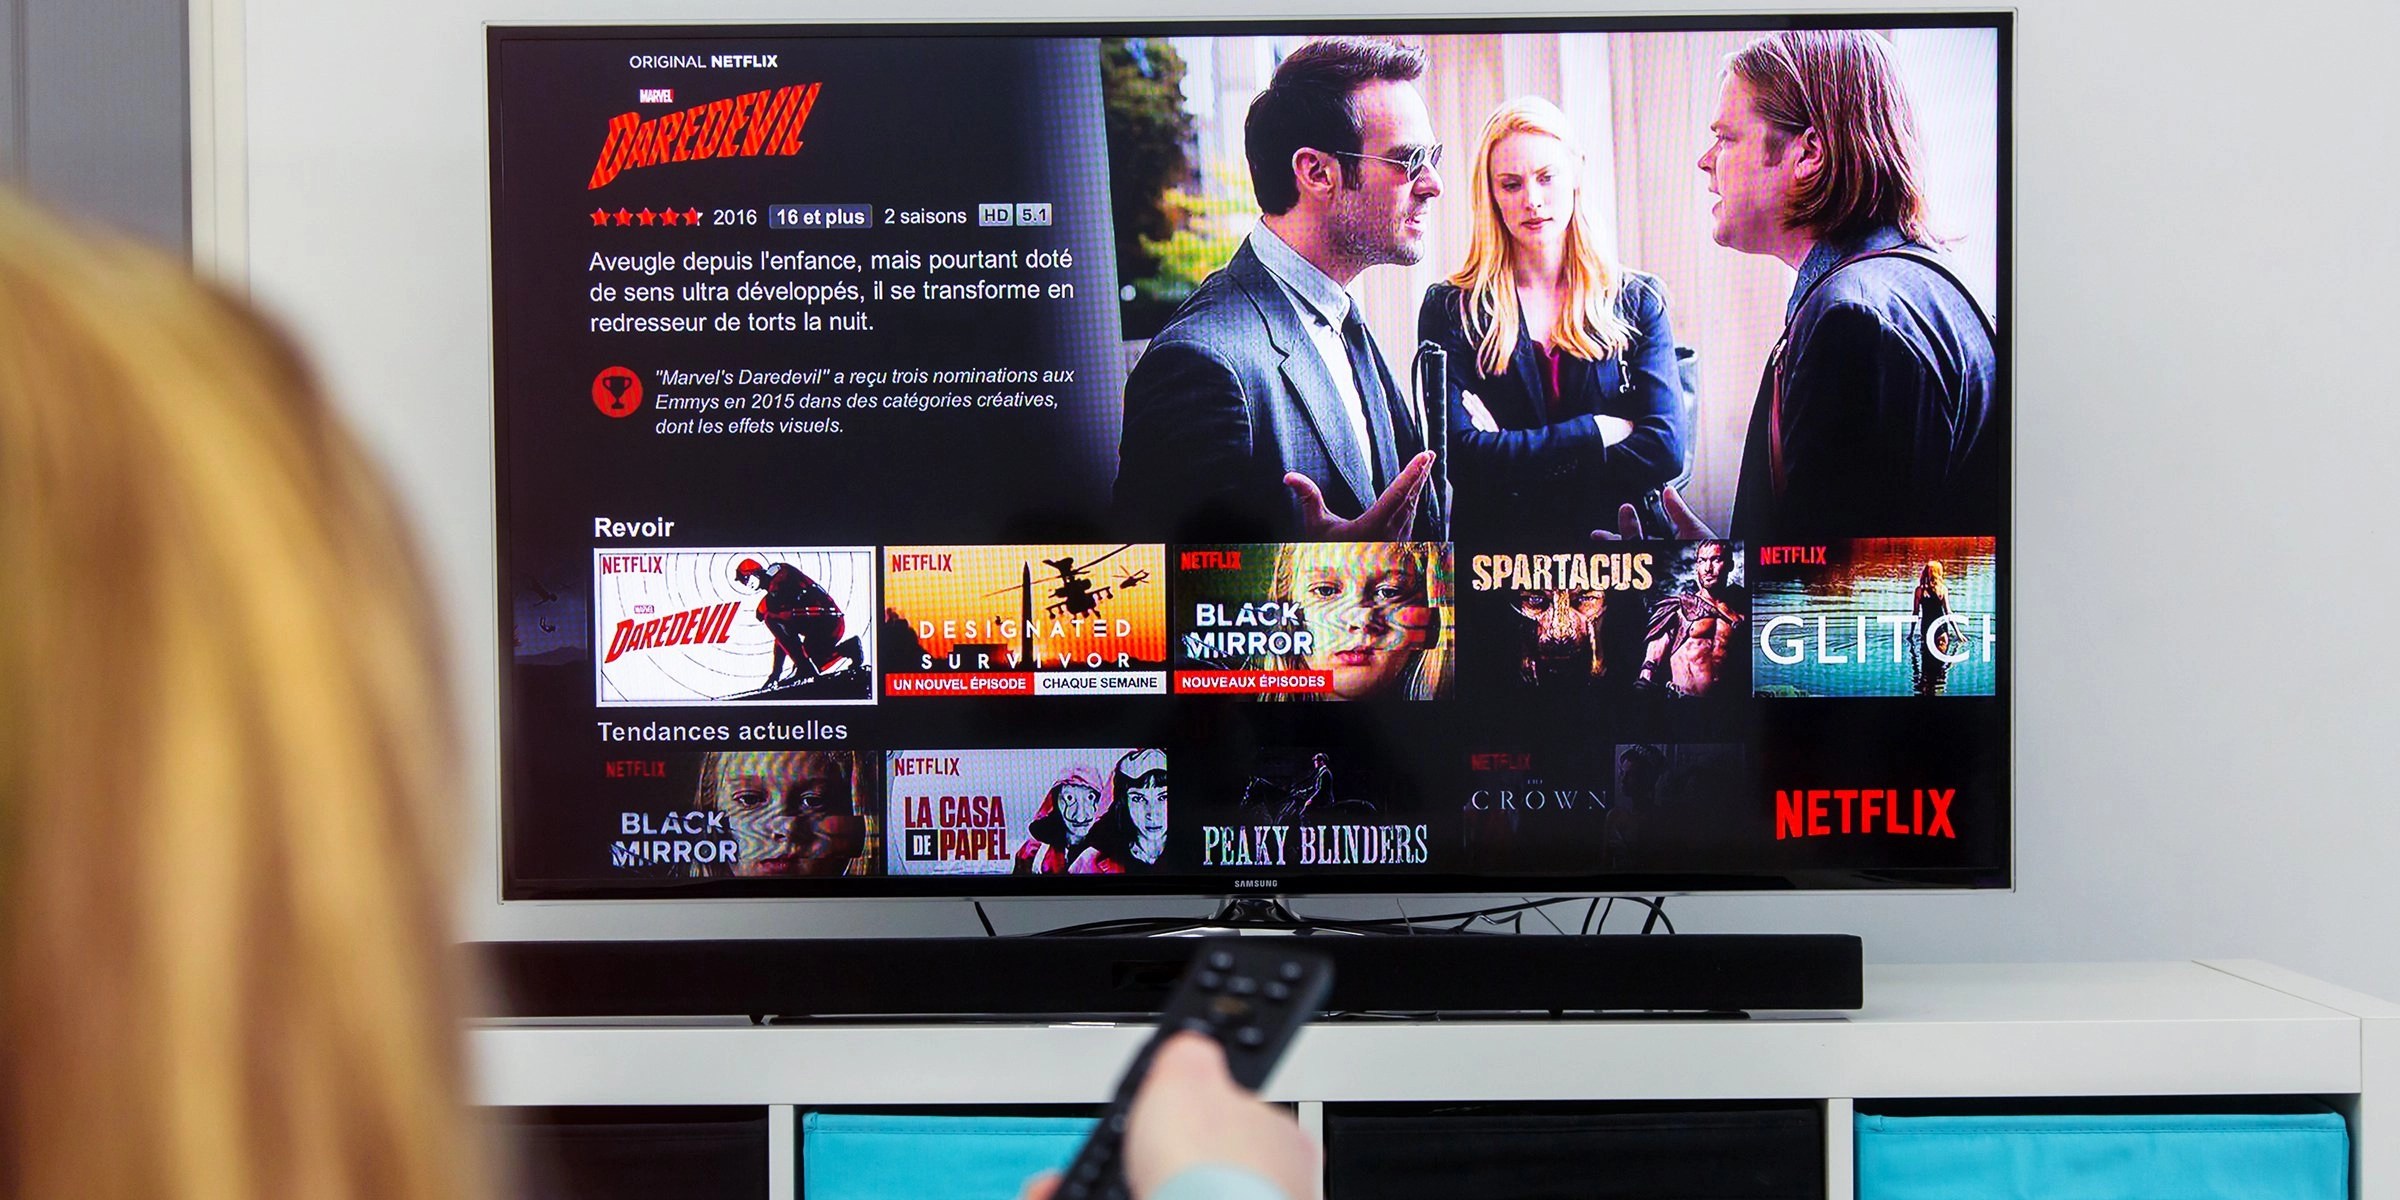 How To Stream Netflix In 4K